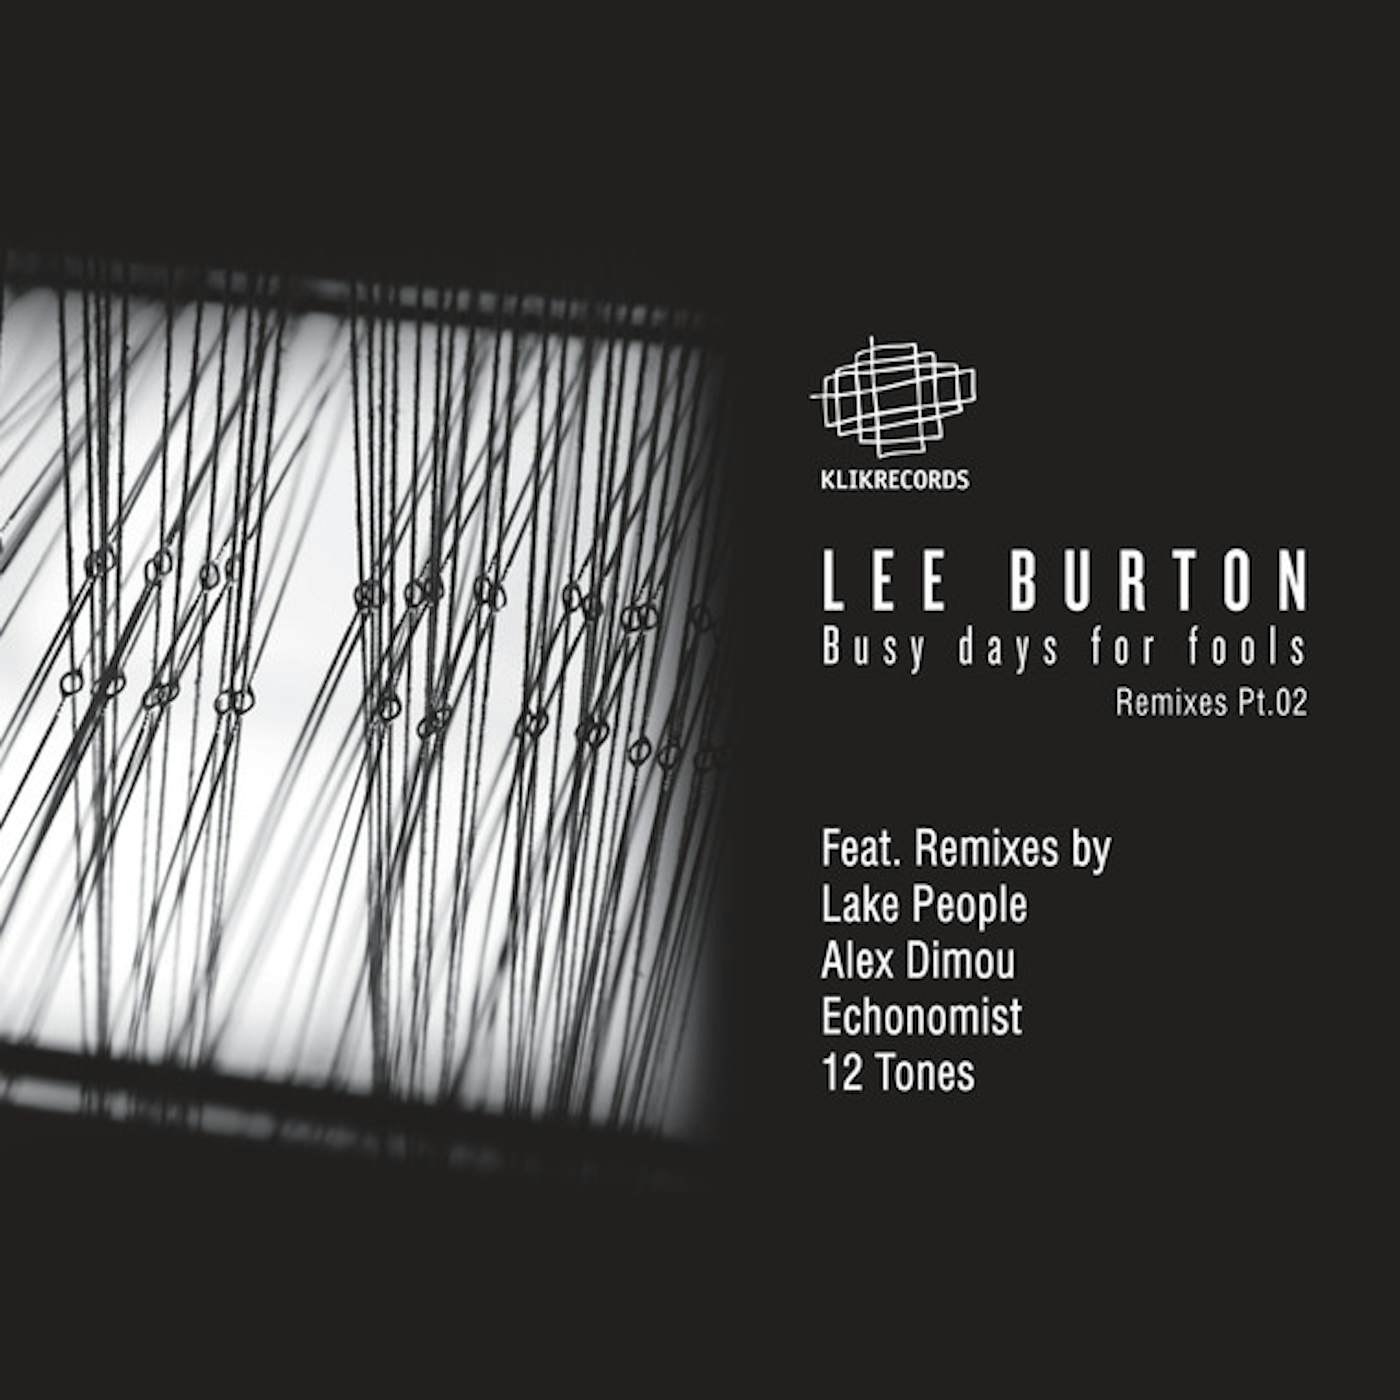 Lee Burton BUSY DAYS FOR FOOLS REMIXES PT 1 Vinyl Record